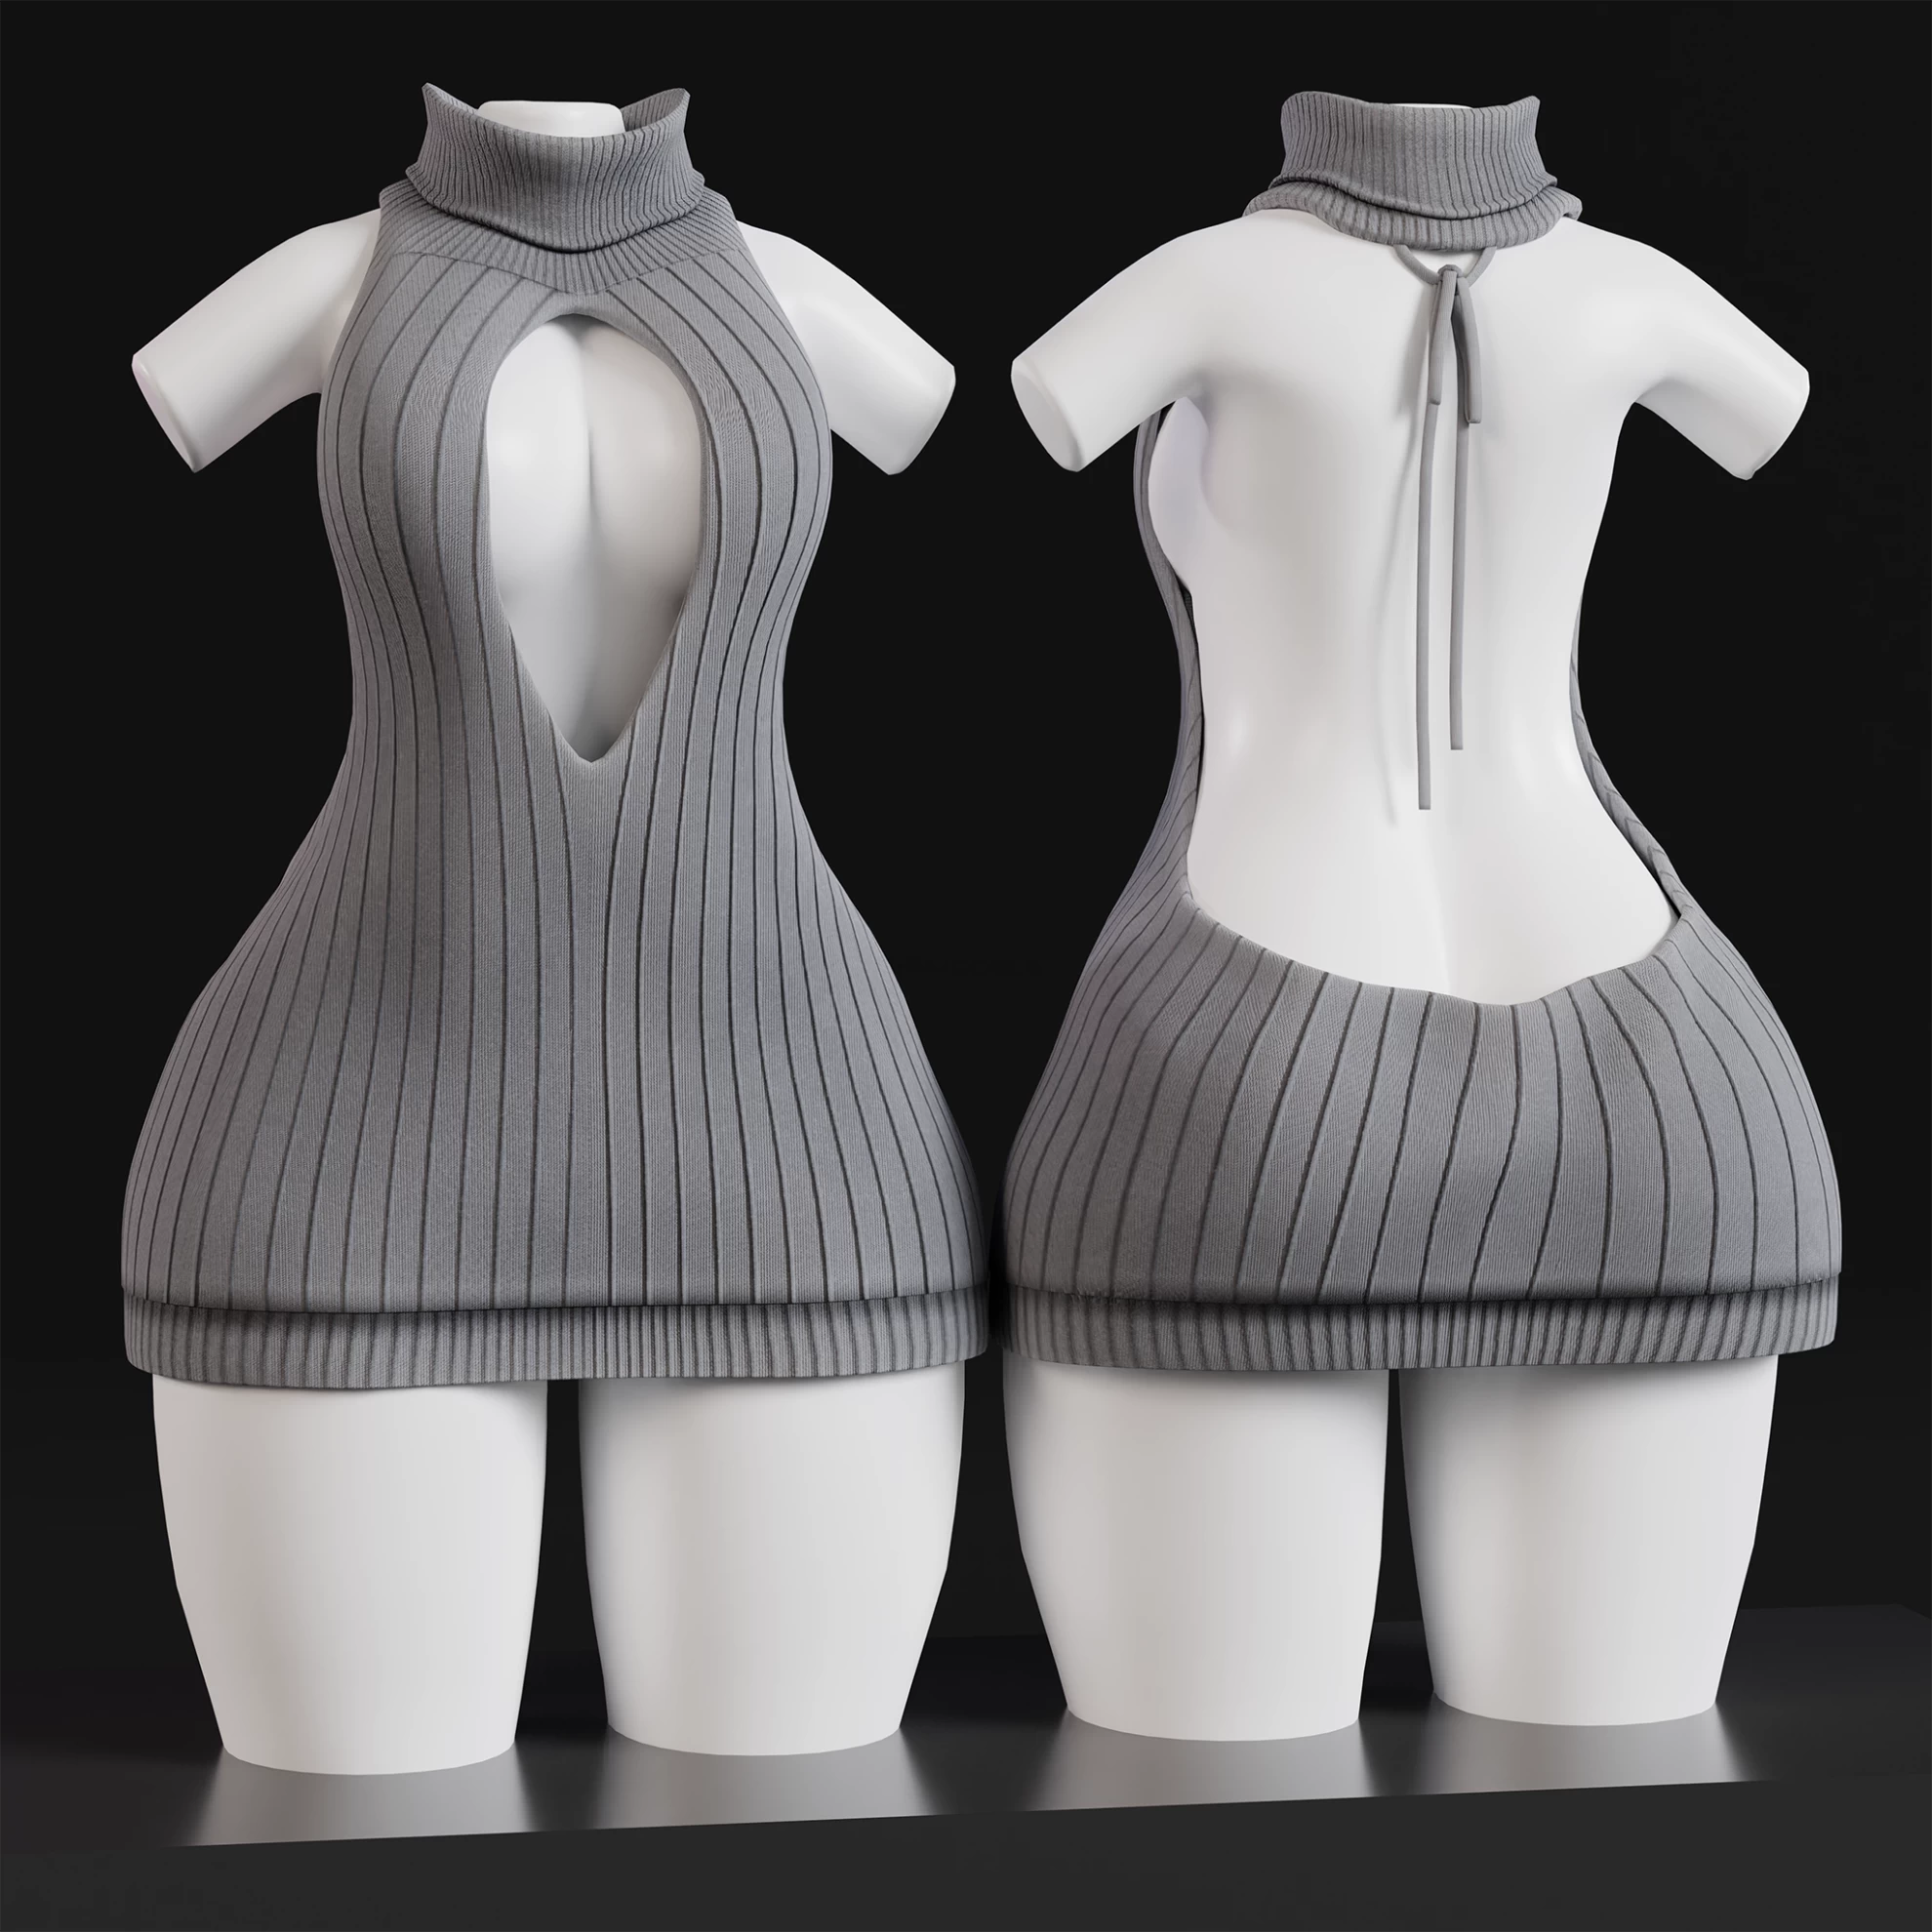 Virgin killer Sweater » VRModels - 3D Models for VR / AR and CG projects